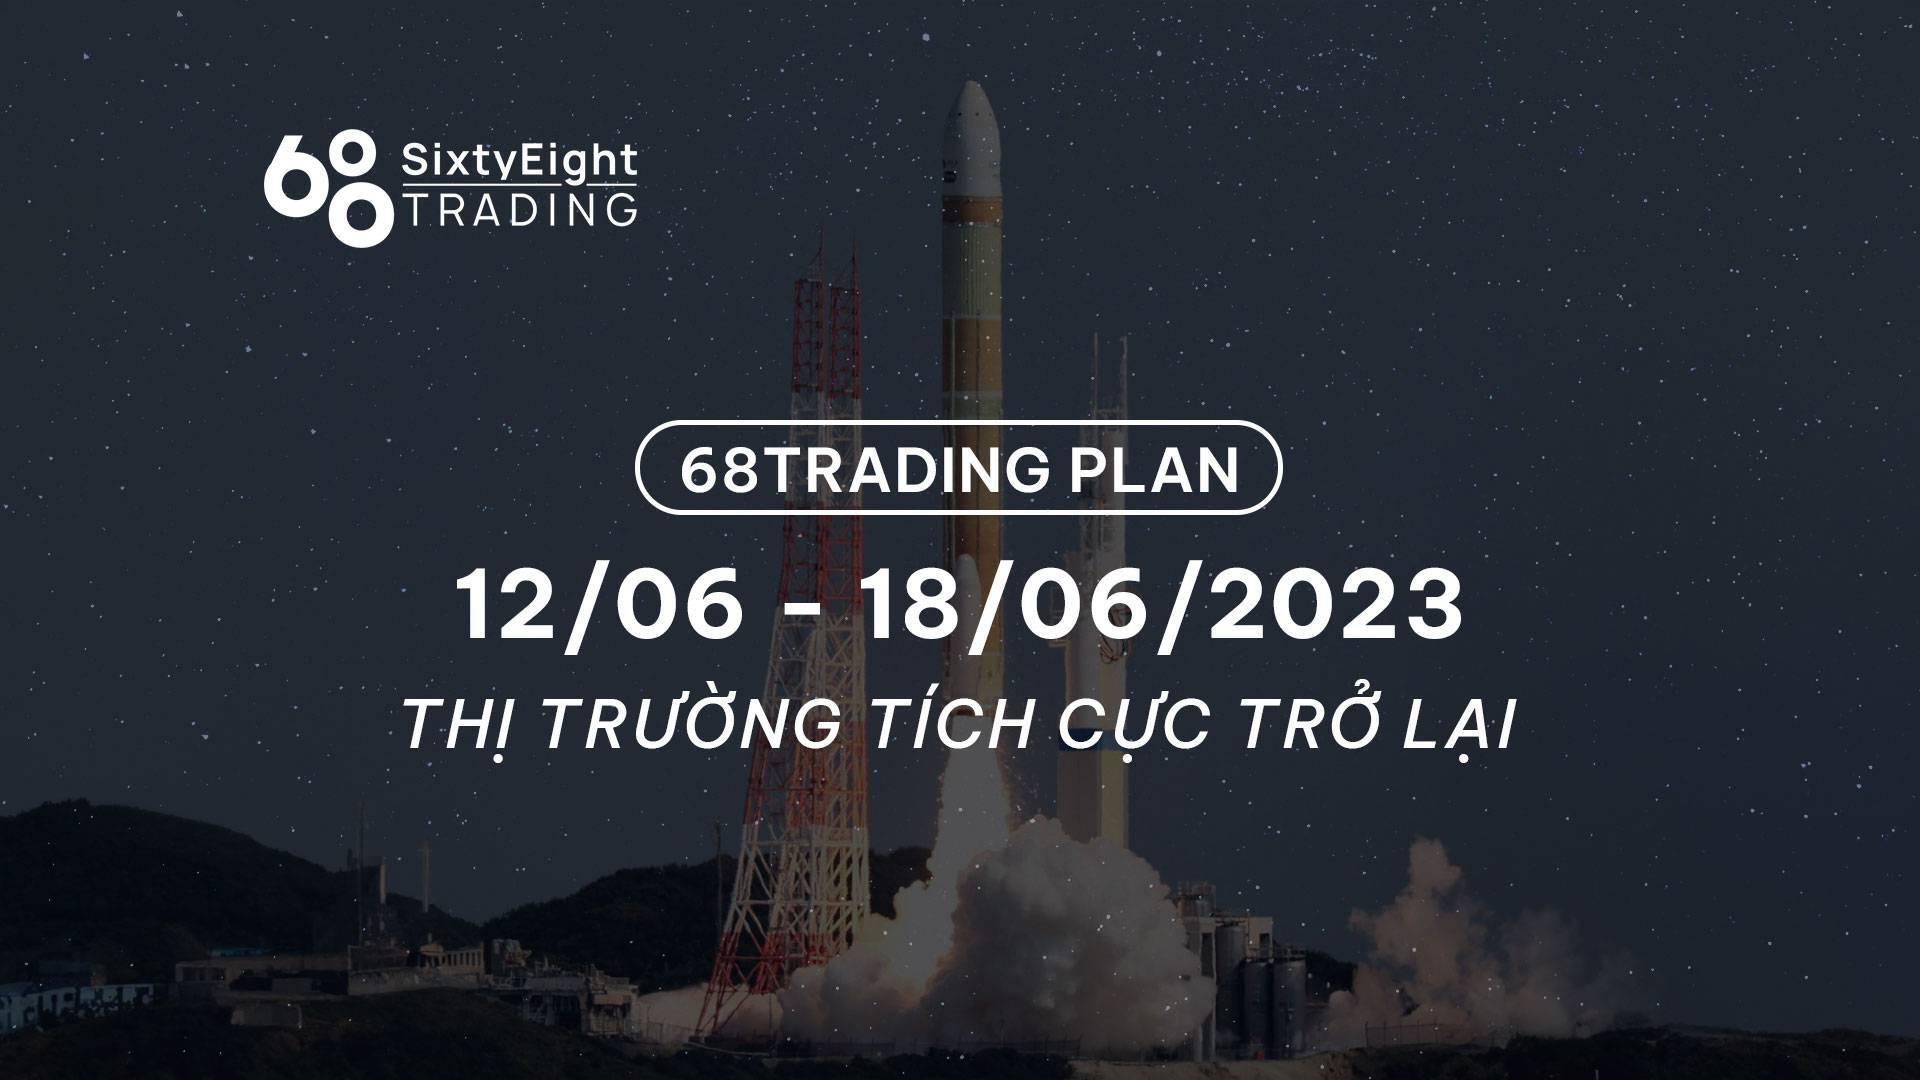 68-trading-plan-1906-25062023-thi-truong-tich-cuc-tro-lai